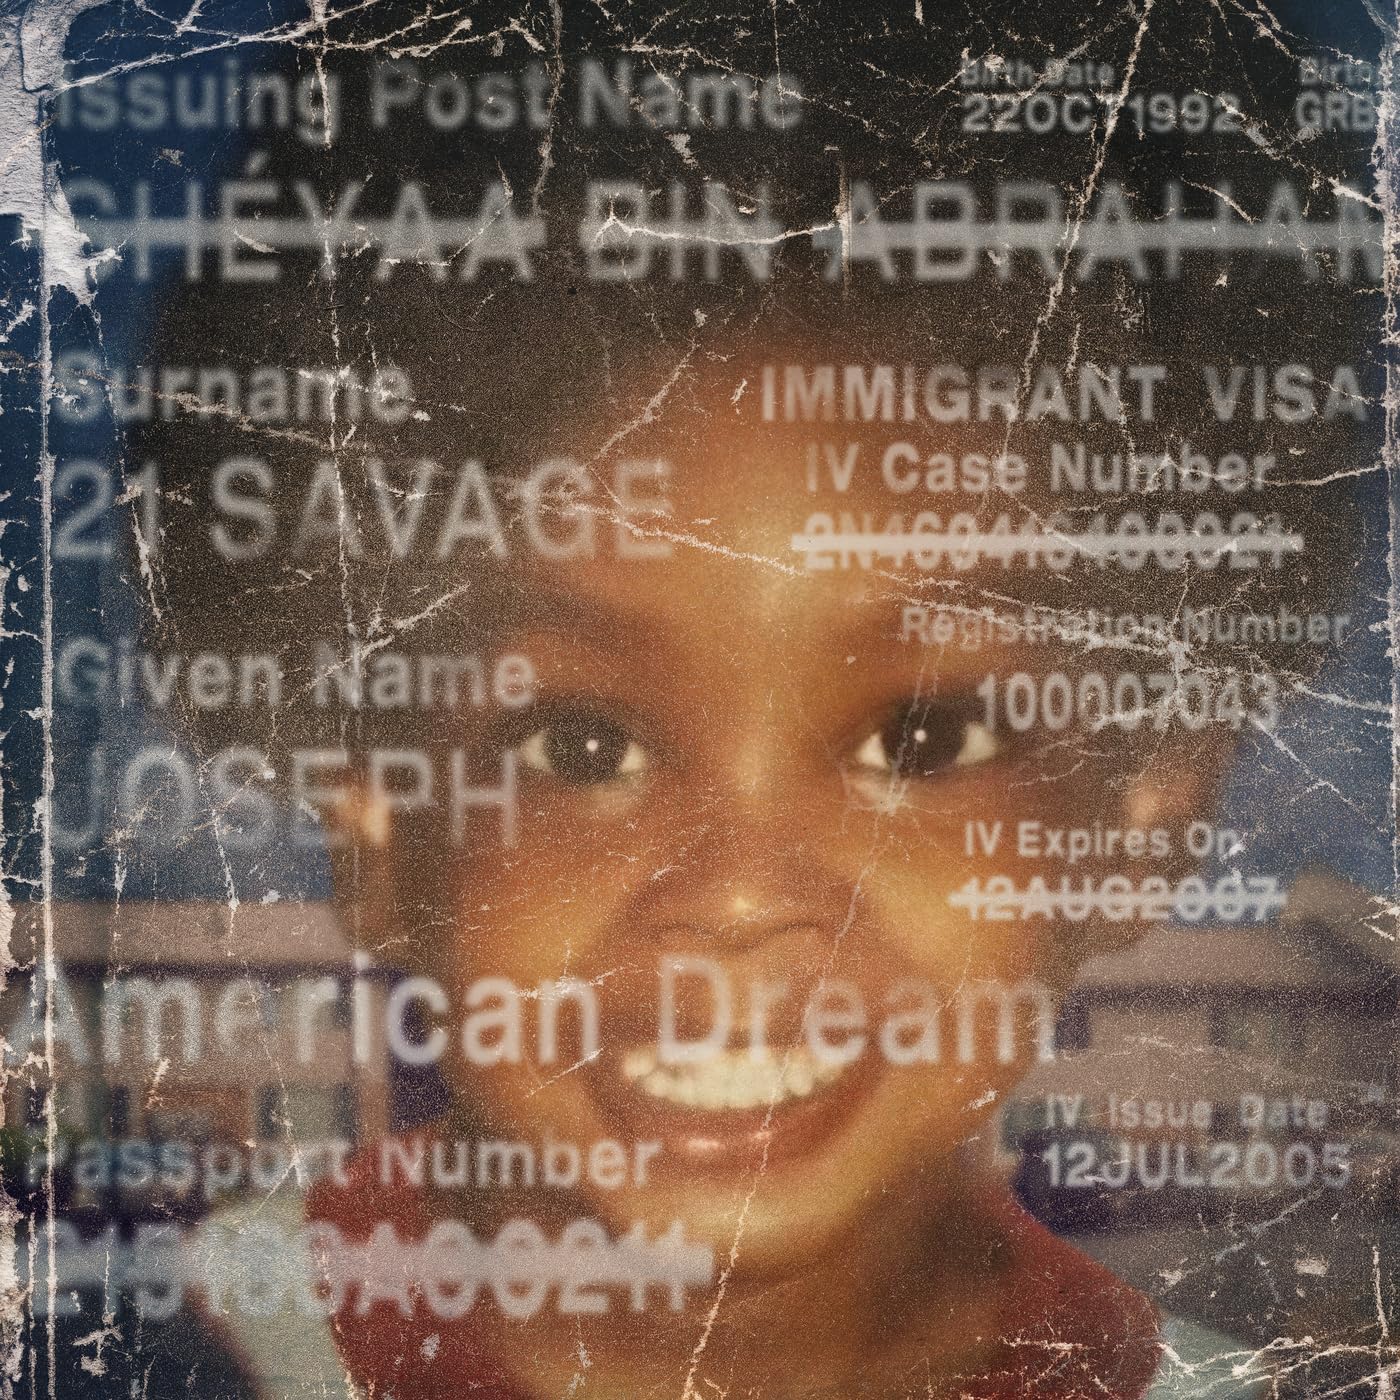 21 Savage redrum cover artwork